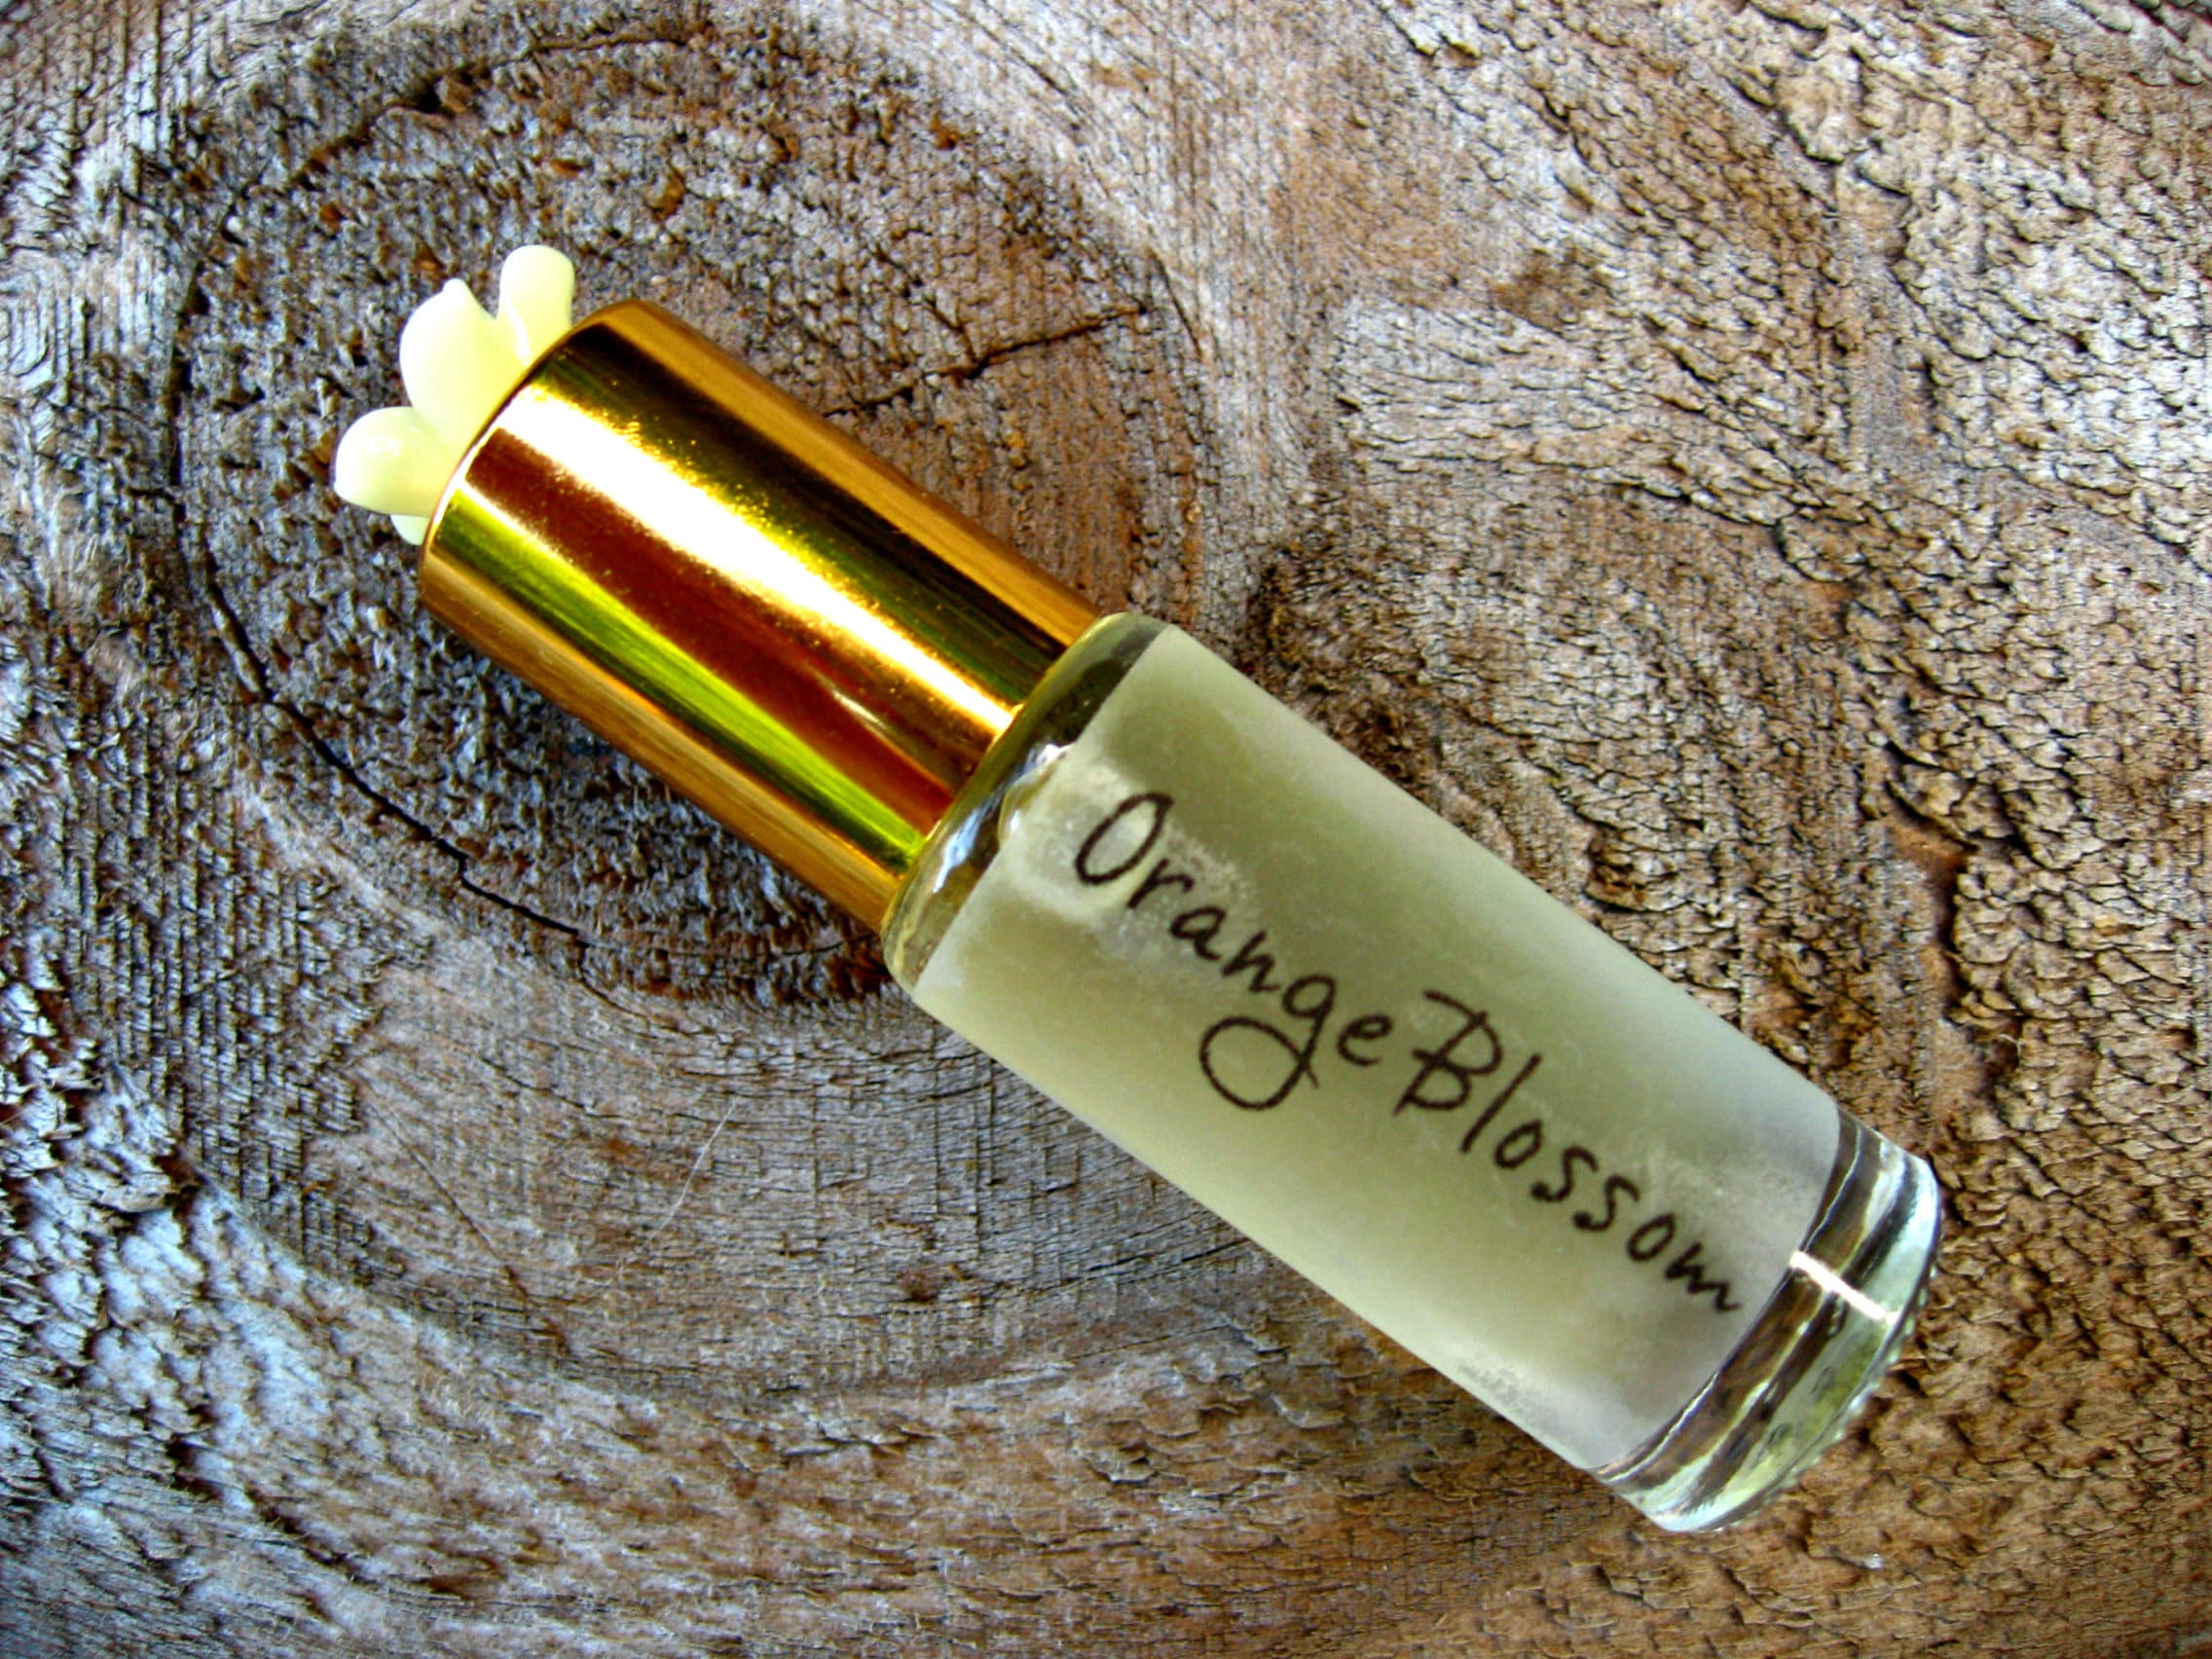 TUBEROSE PERFUME. Custom-blended Roll-on Perfume. Contains Tuberose  Essential Oil & Fragrance. Made in Hawaii. 0.5 Fl Oz 15 Ml. 